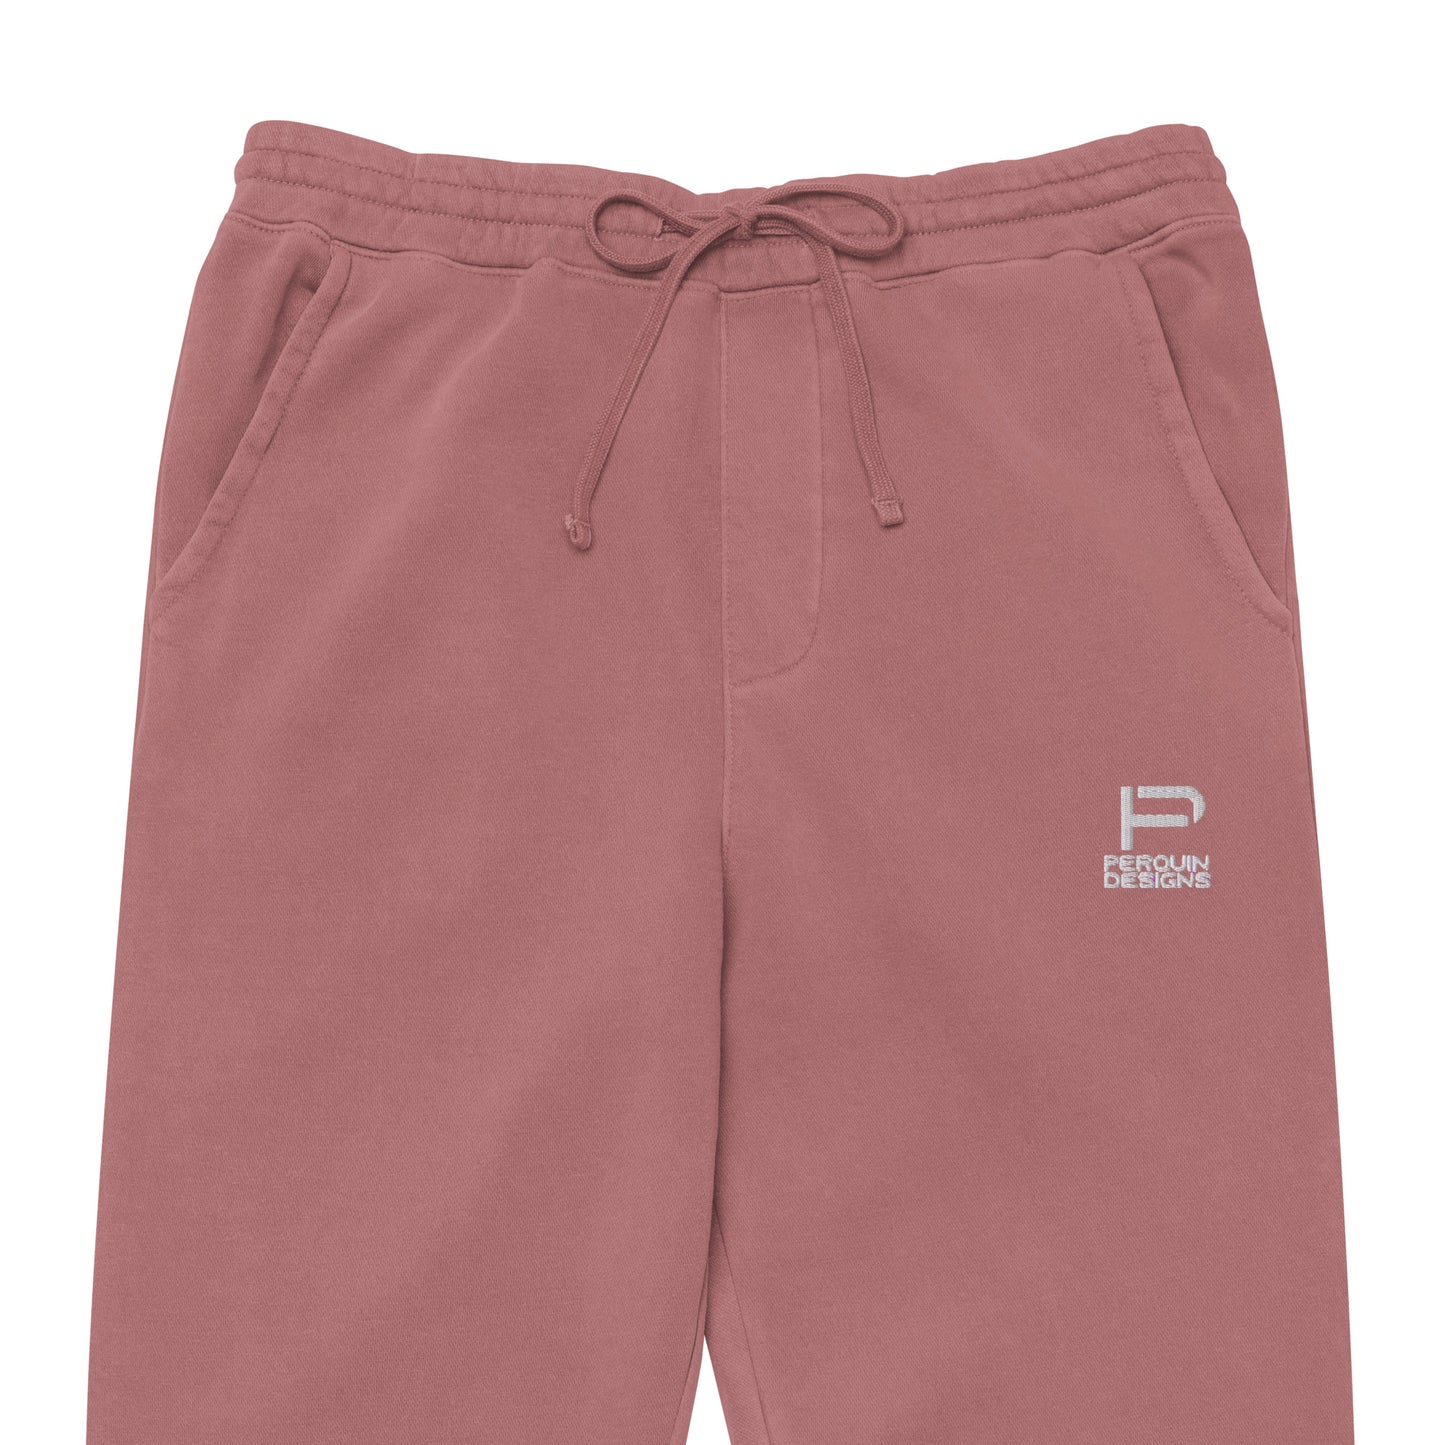 Perquin Designs PD Classic Logo Colorful Cozy Sweatpants